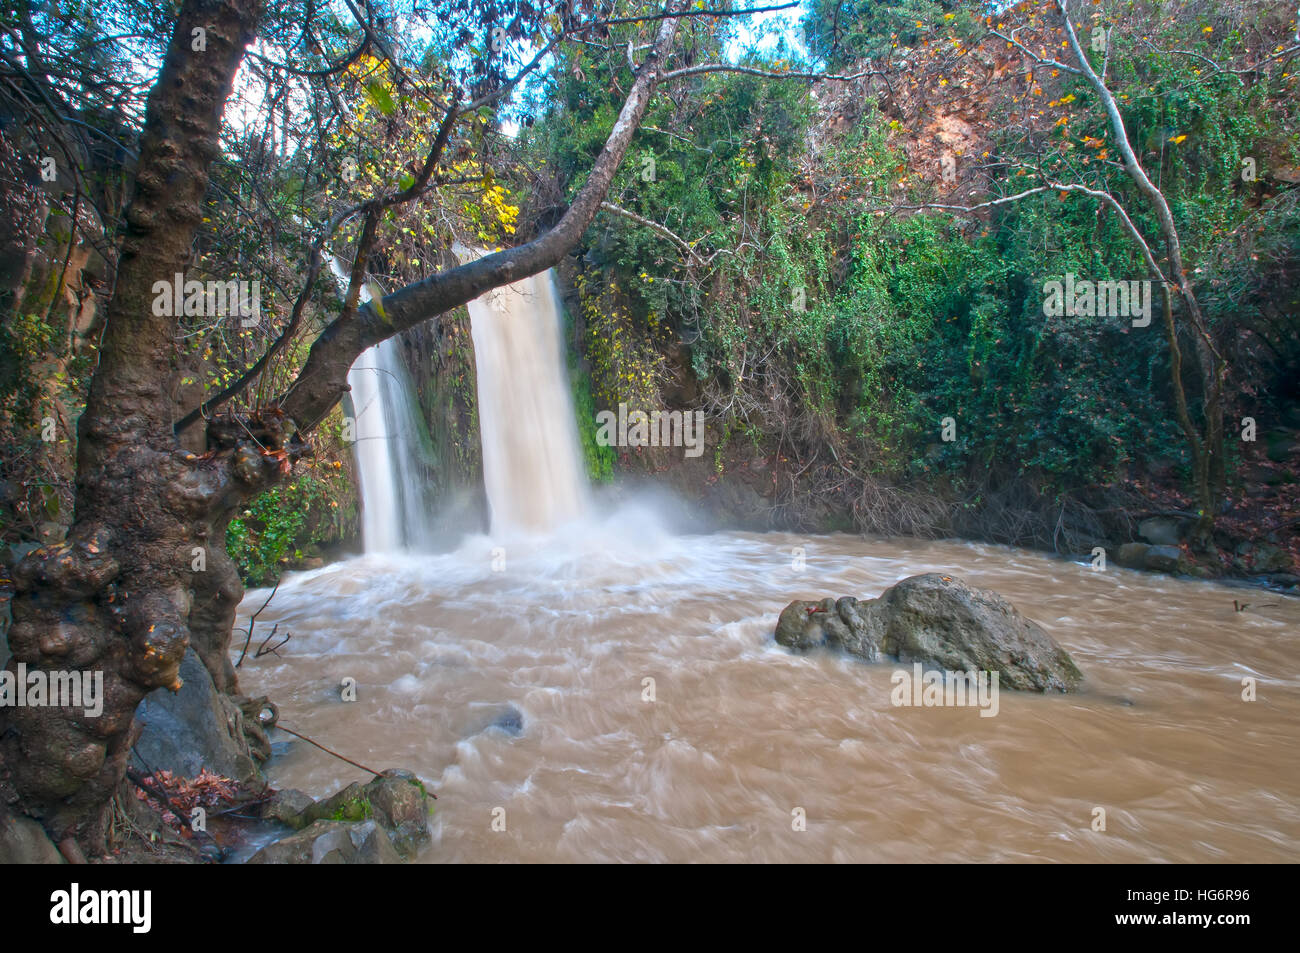 Banias Waterfalls, Israel, Stock Photo